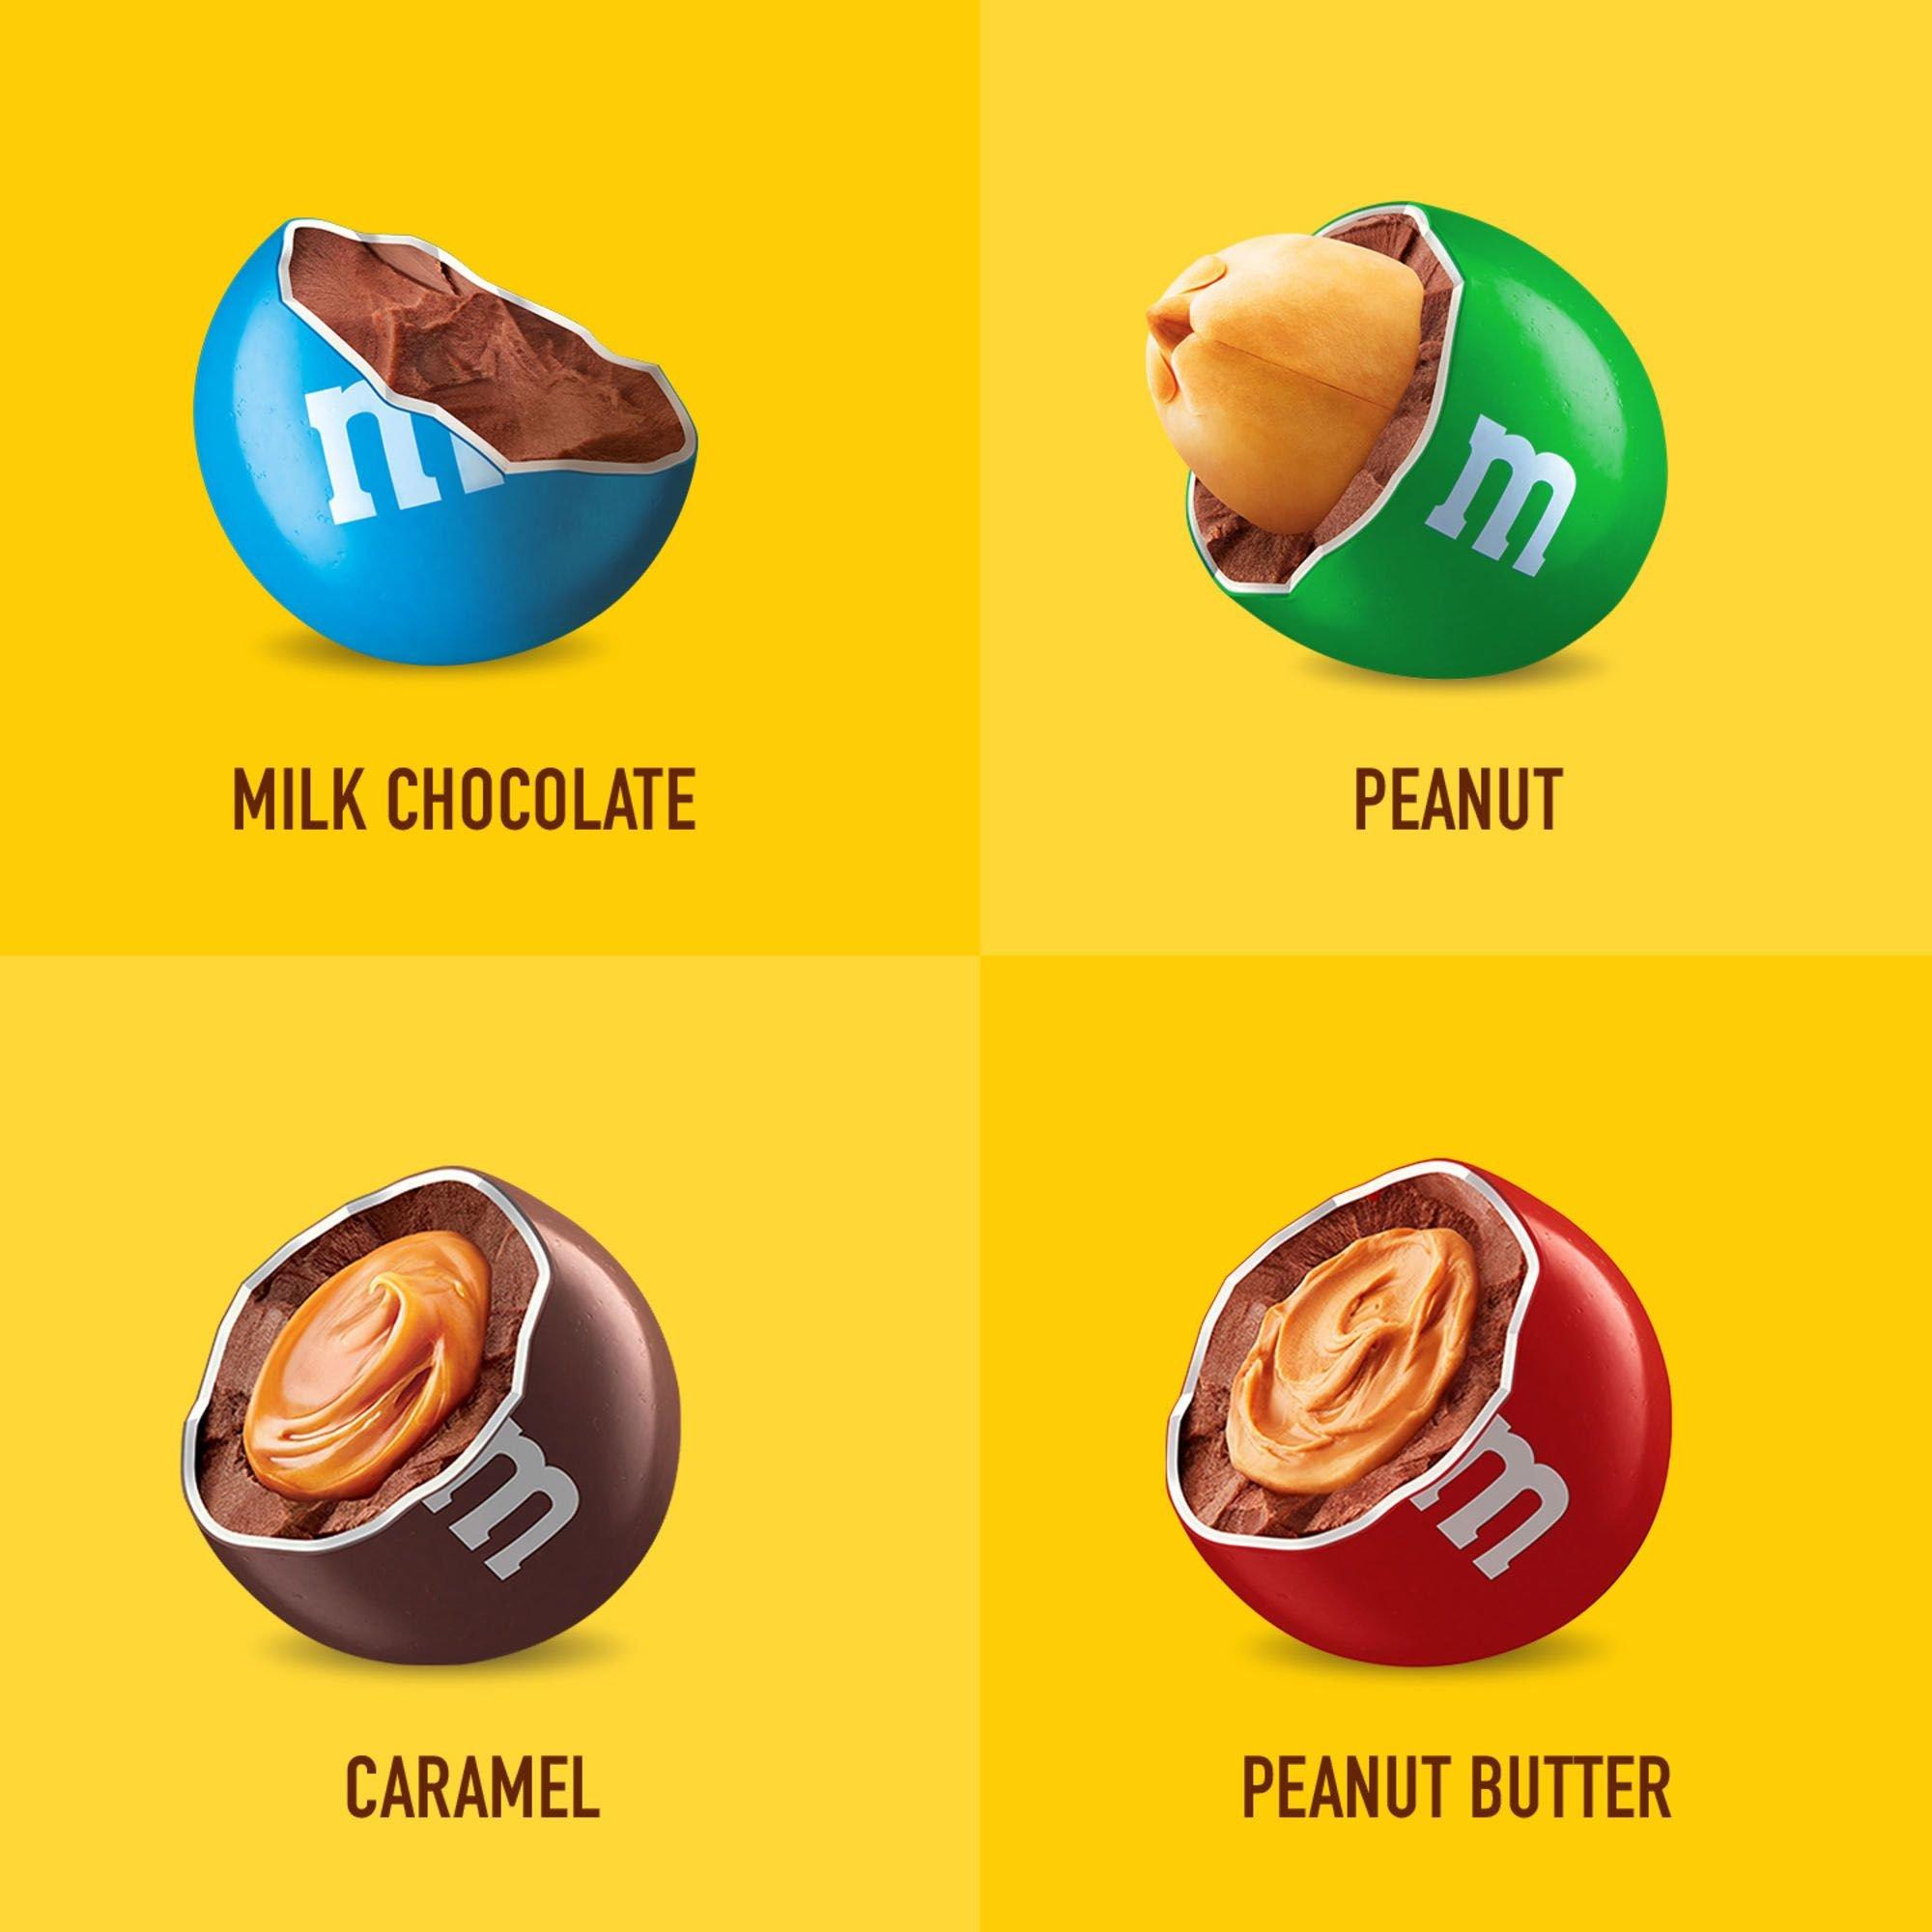 M&M's Chocolate Candies, Peanut/Milk Chocolate/Peanut Butter